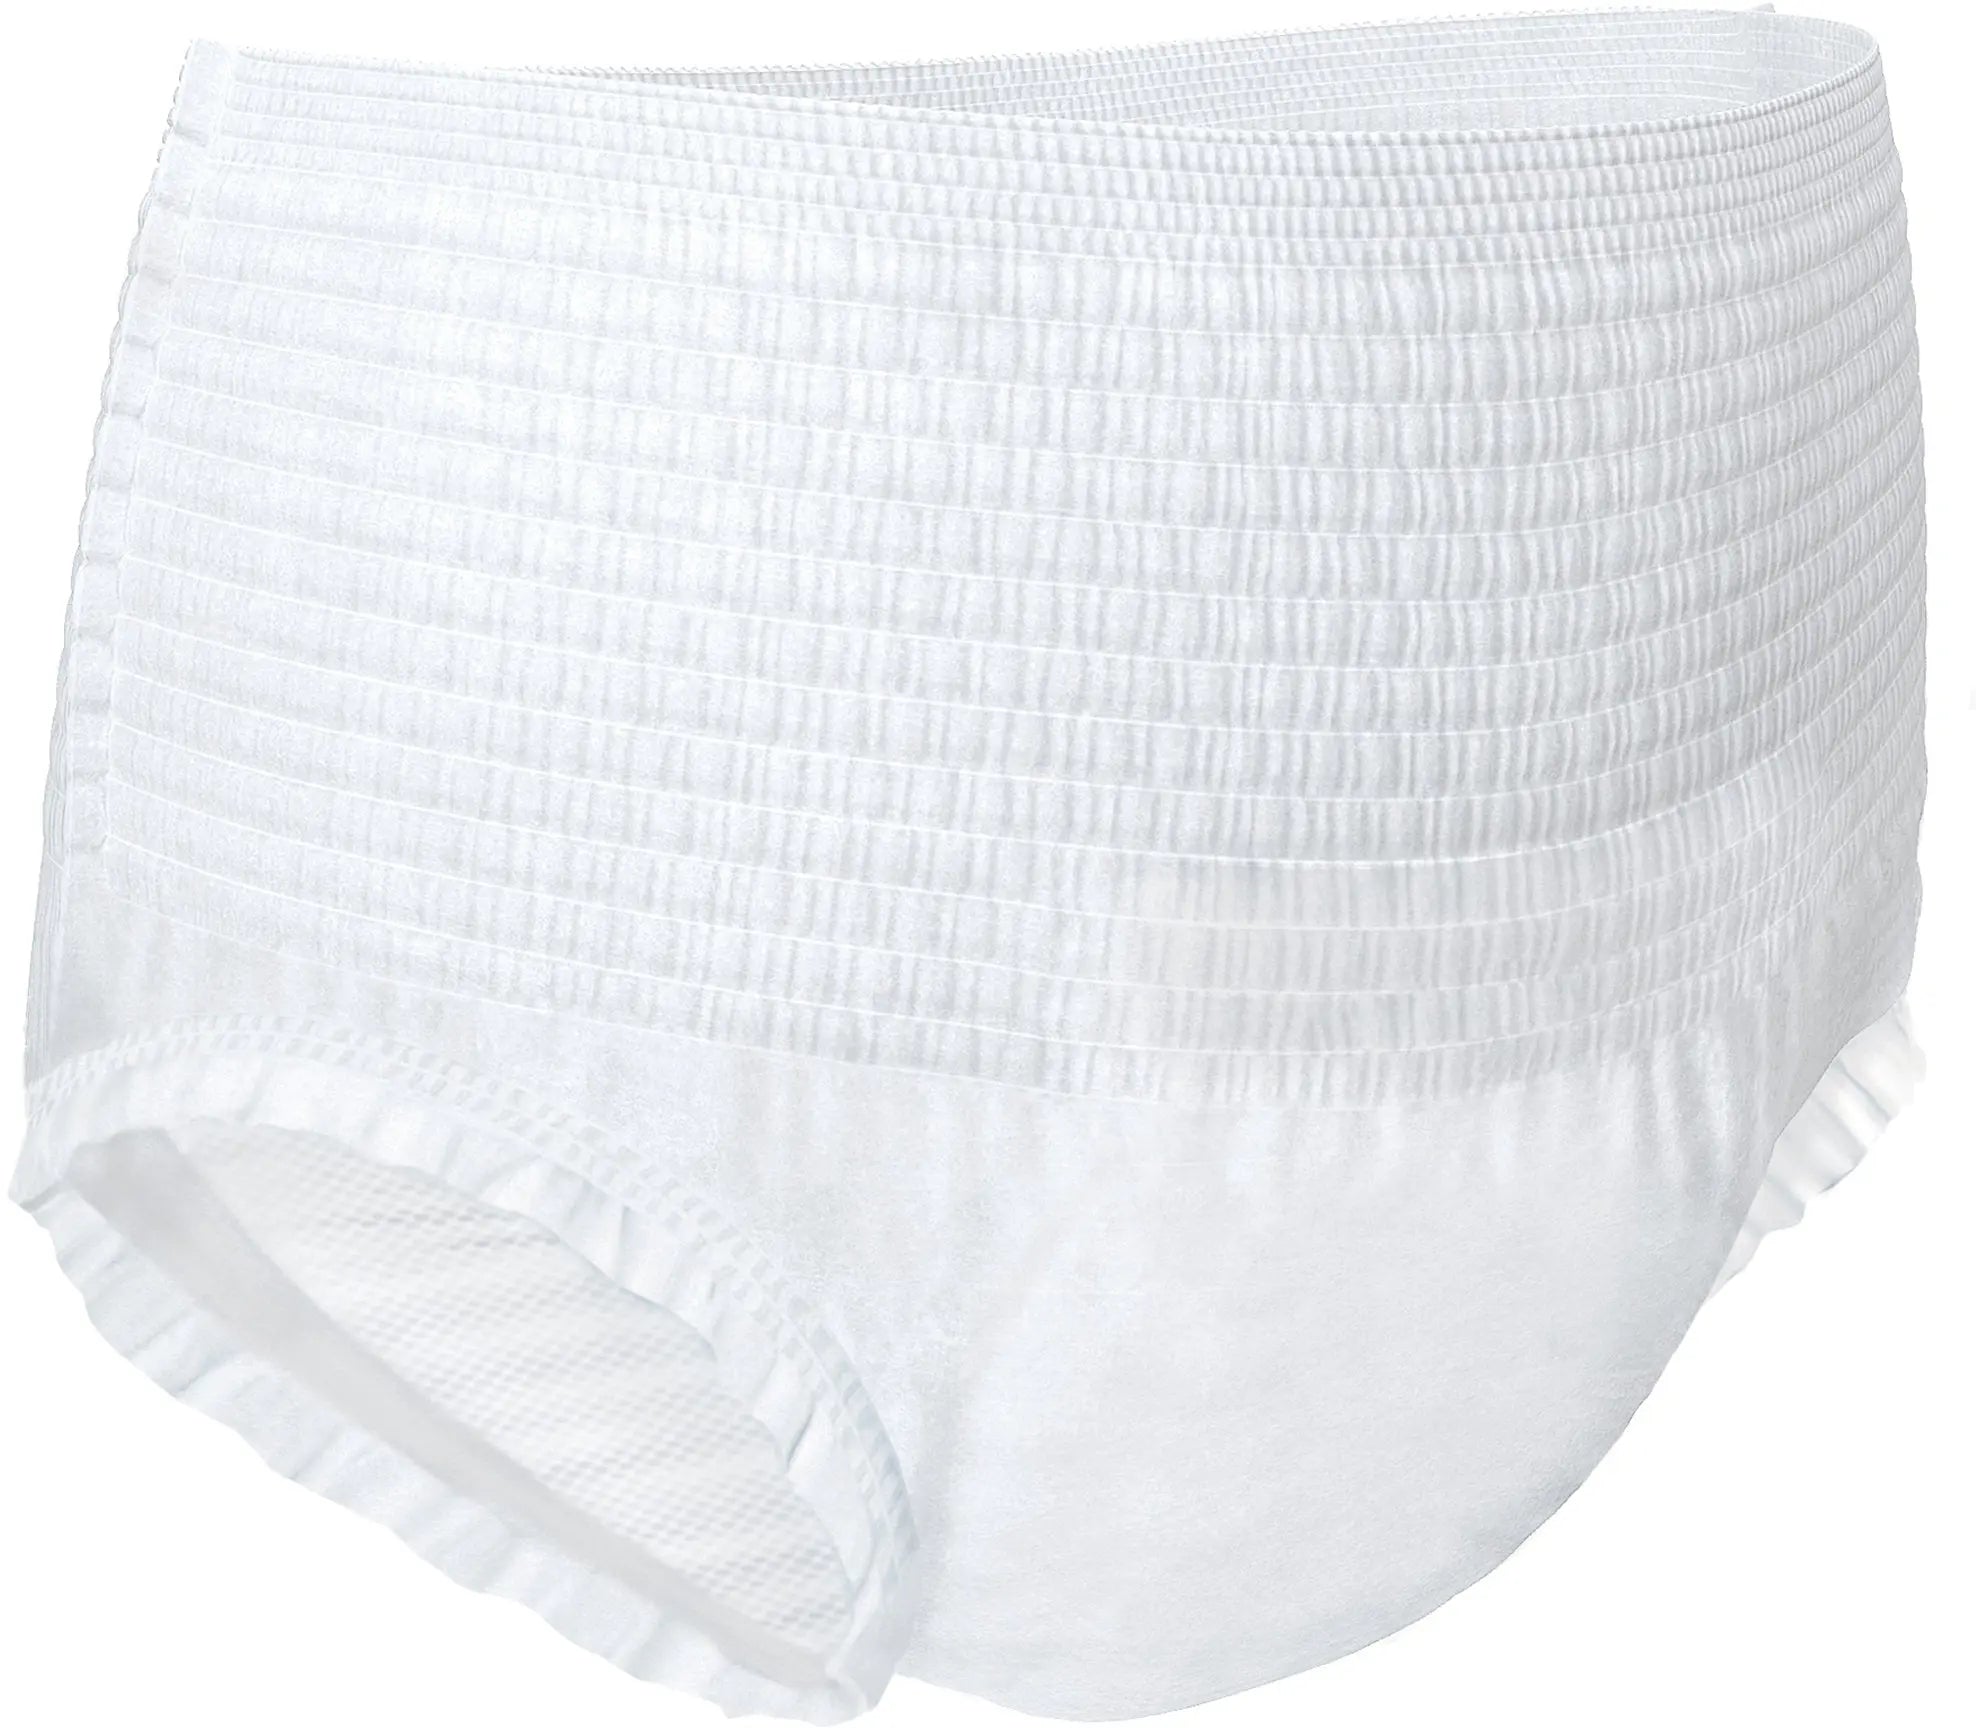 TENA Dry Comfort Protective Underwear, Large (Case of 72)